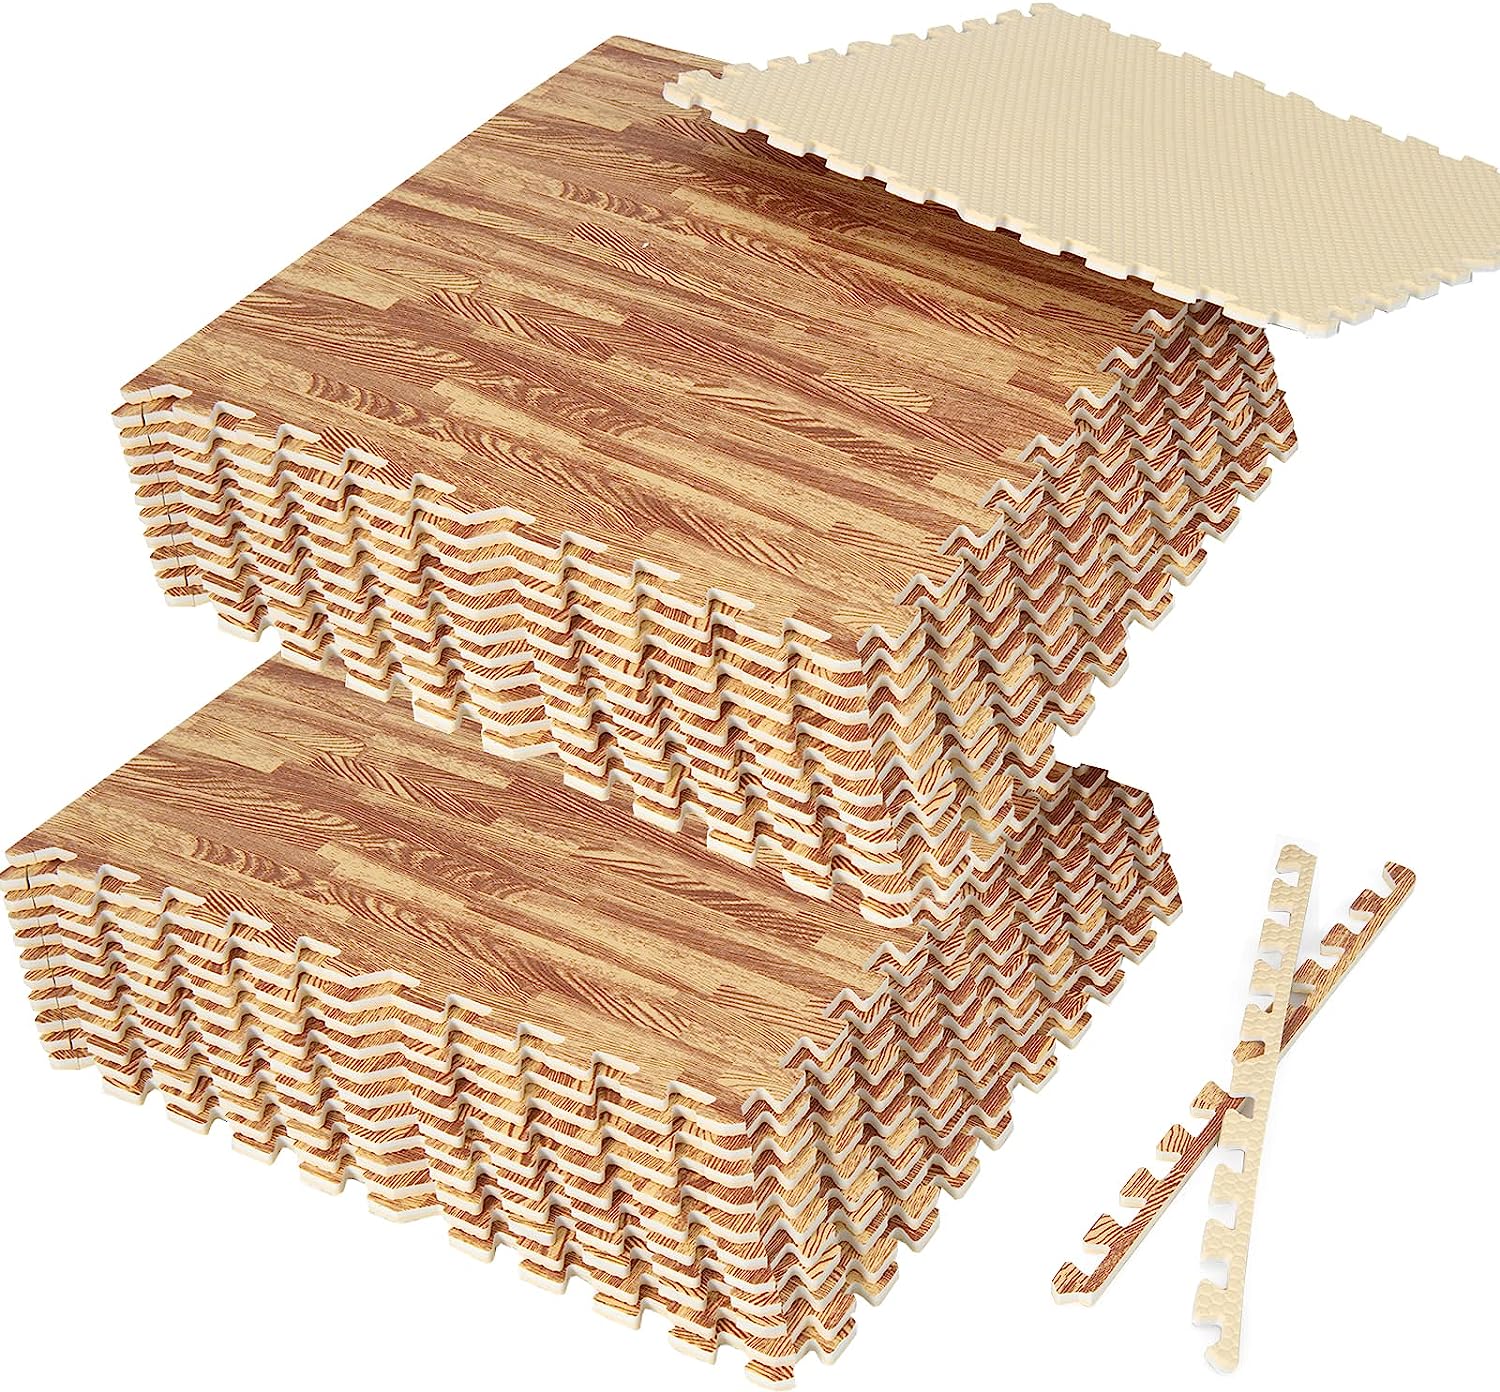 Giantex Foam Floor Tiles, 12 pcs Interlocking Foam Tiles with 24 Edge Pieces